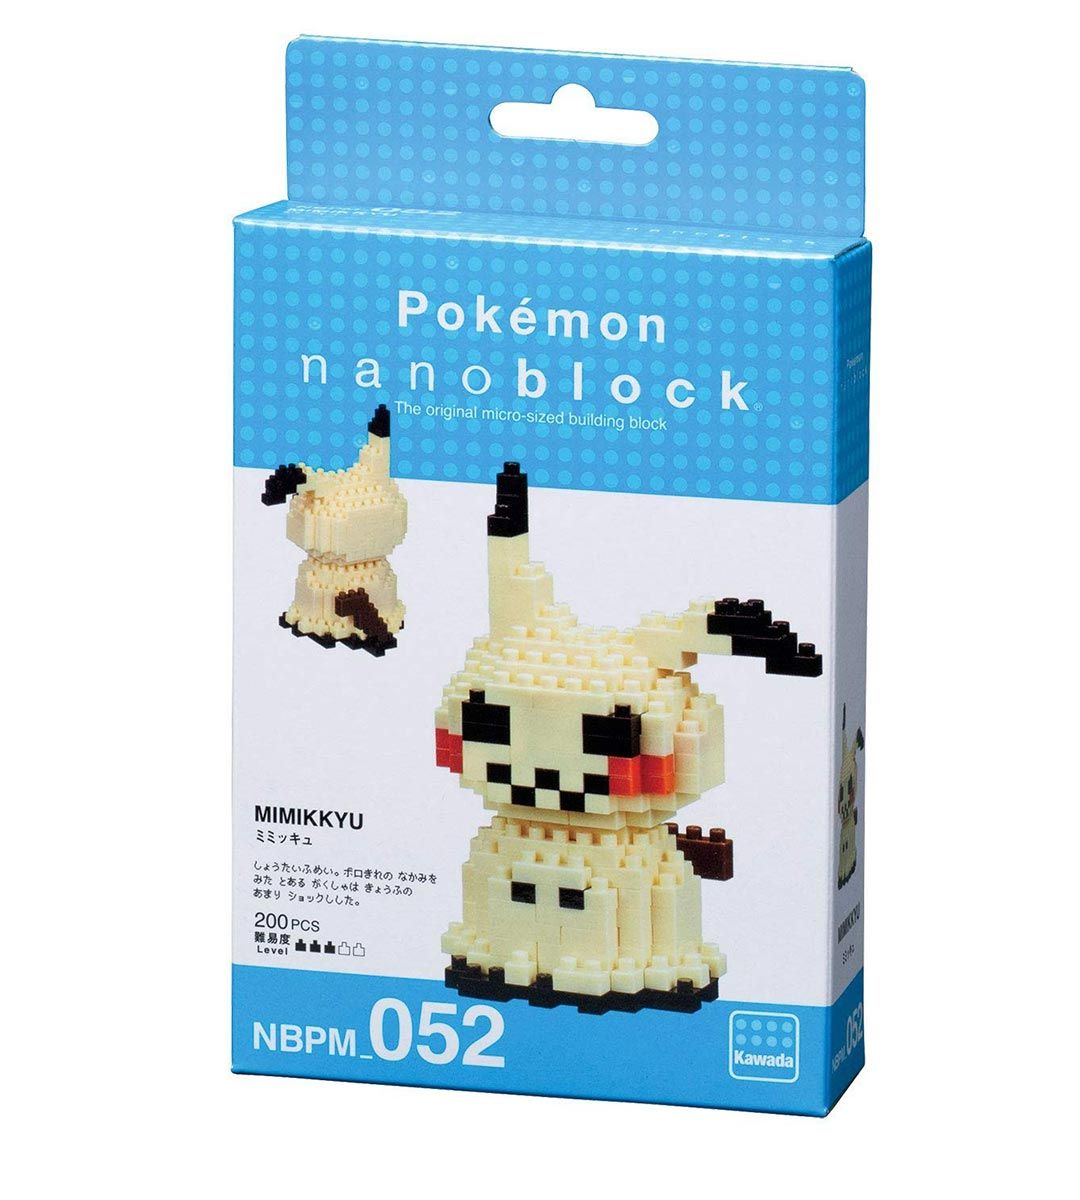 Pokémon x Nanoblock - Mimiqui - NBPM 052